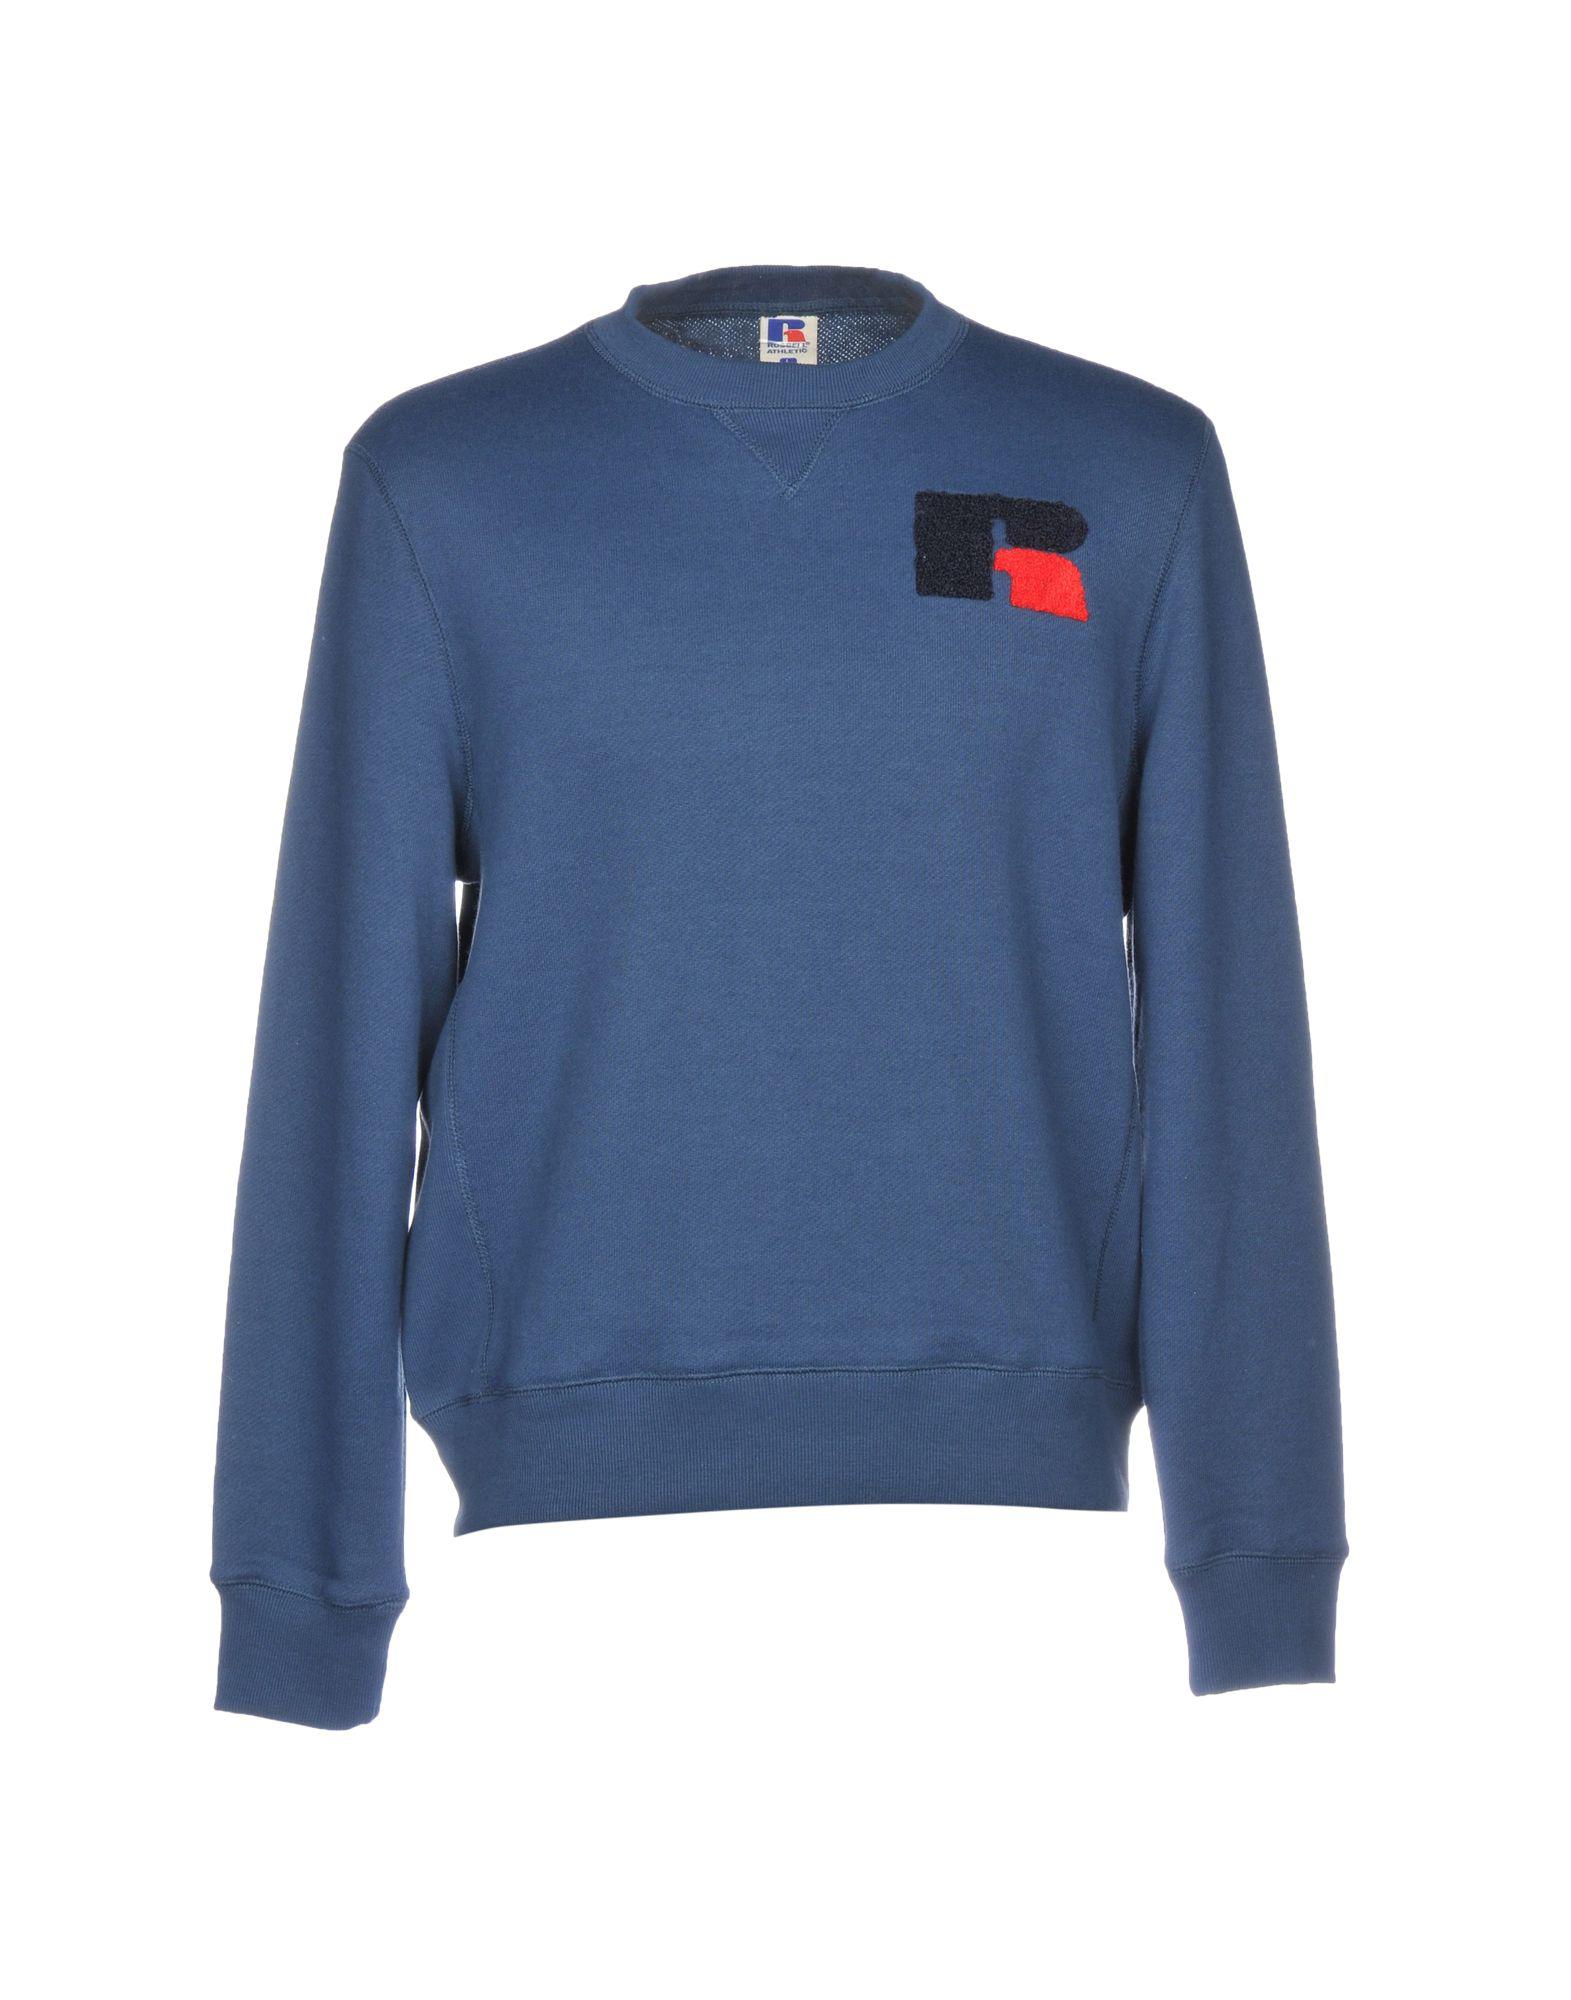 Russell Athletic Cotton Sweatshirt in Slate Blue (Blue) for Men - Lyst